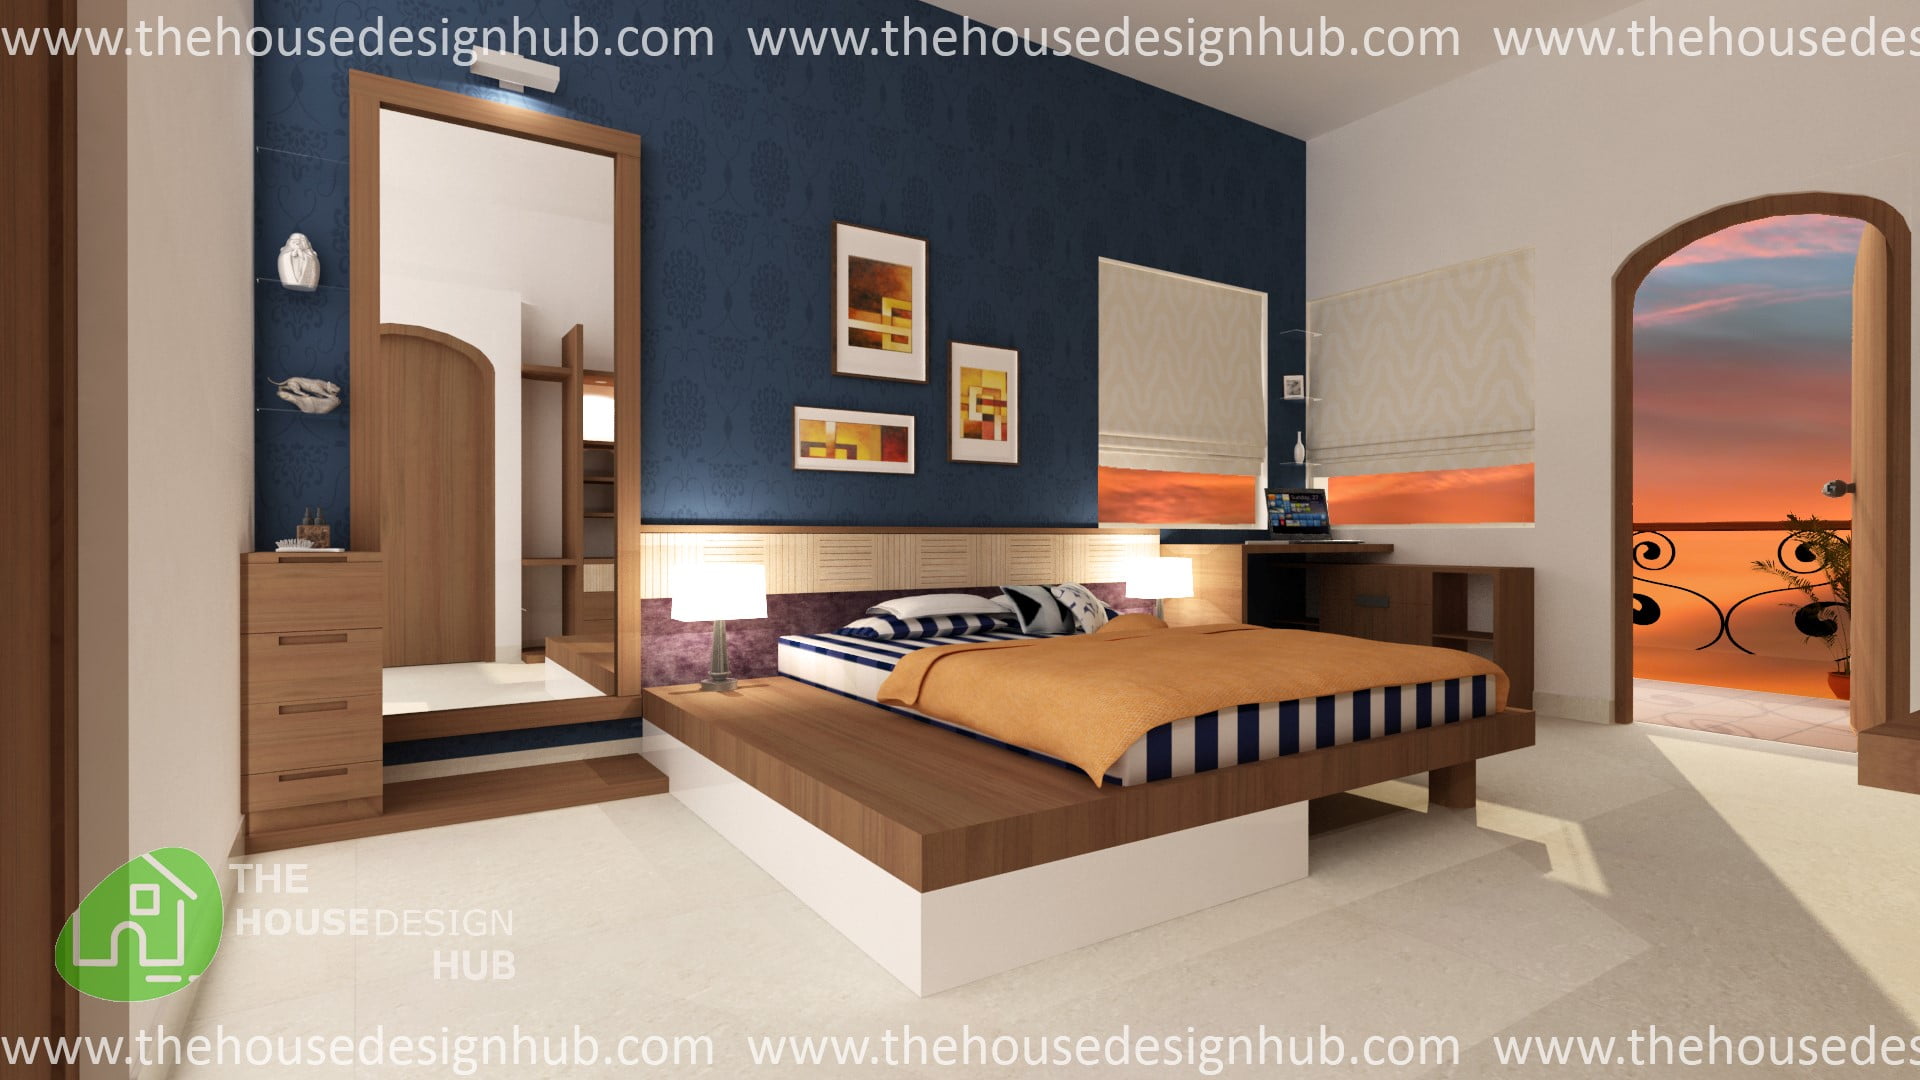 09I. Contemporary Blue Textured Bedroom Spaces Interior Designs